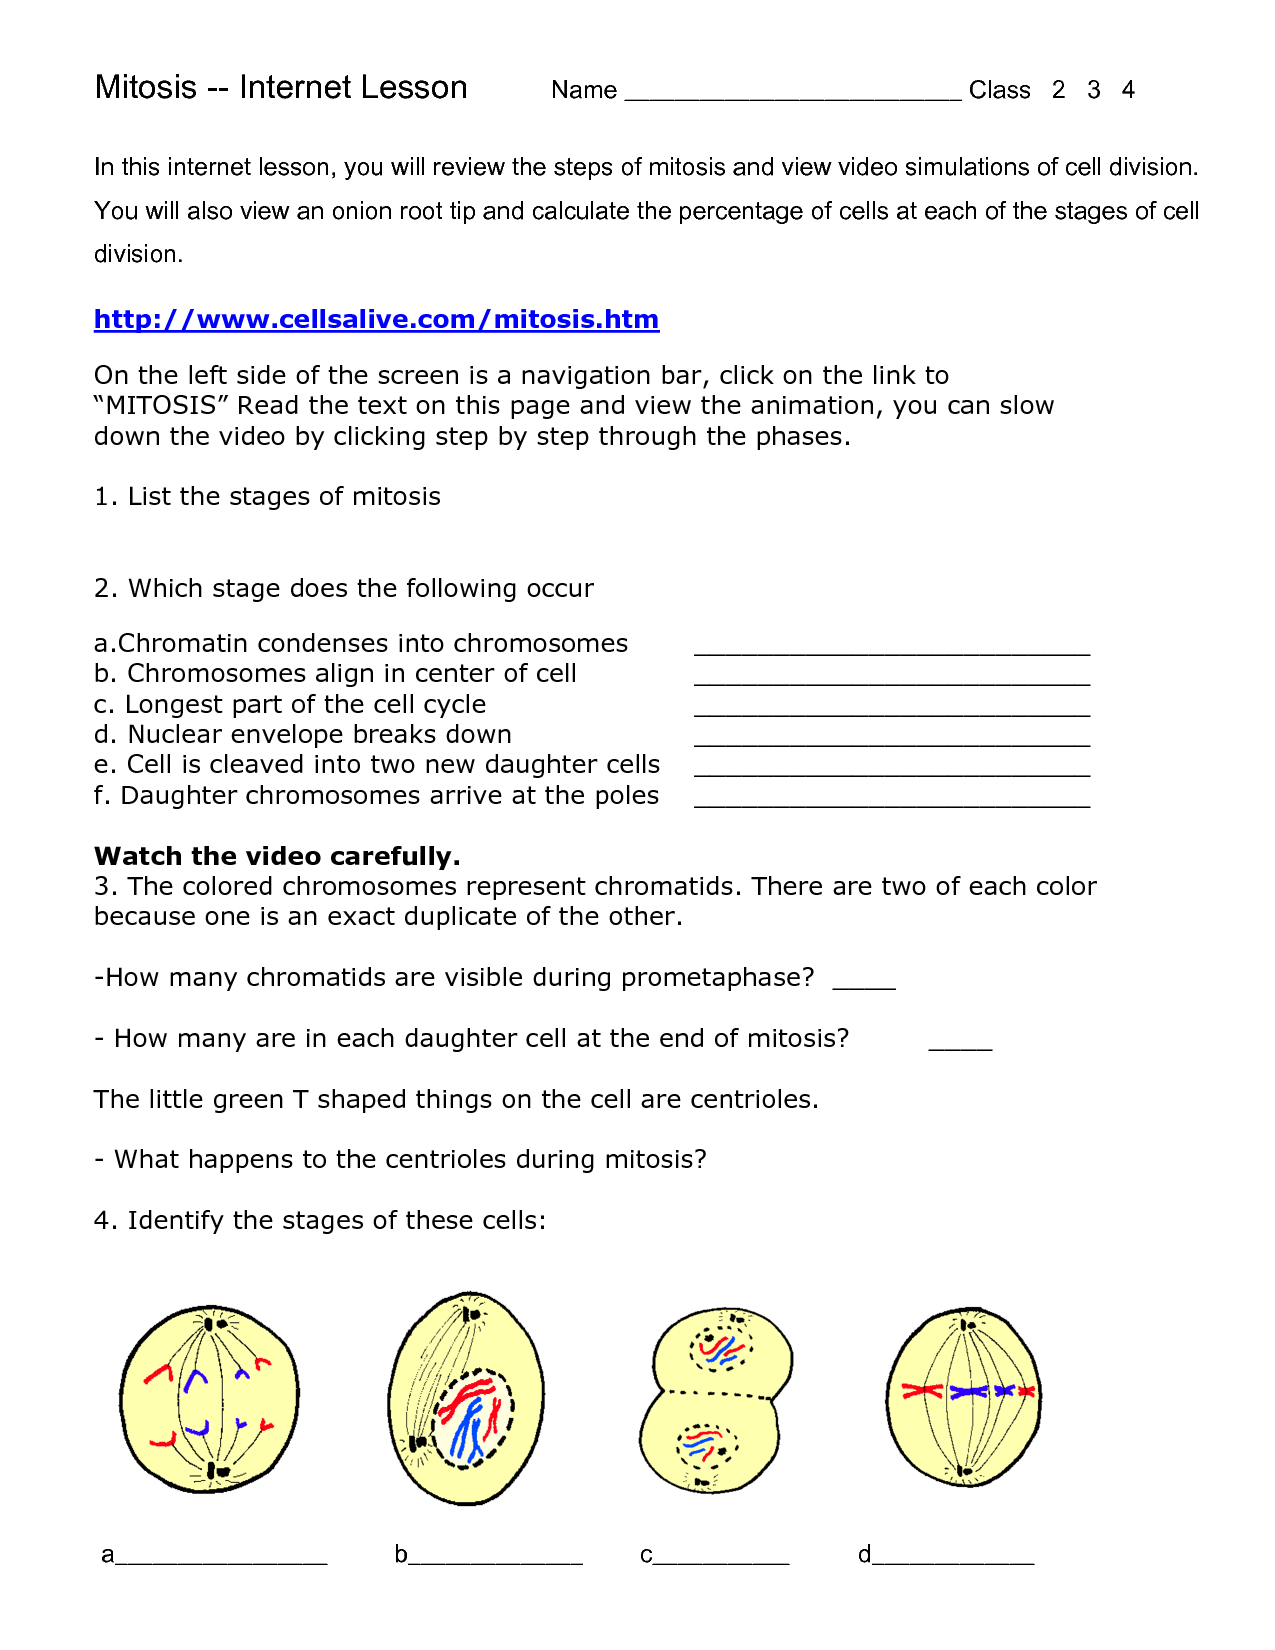 meiosis-worksheet-answer-key-biology-corner